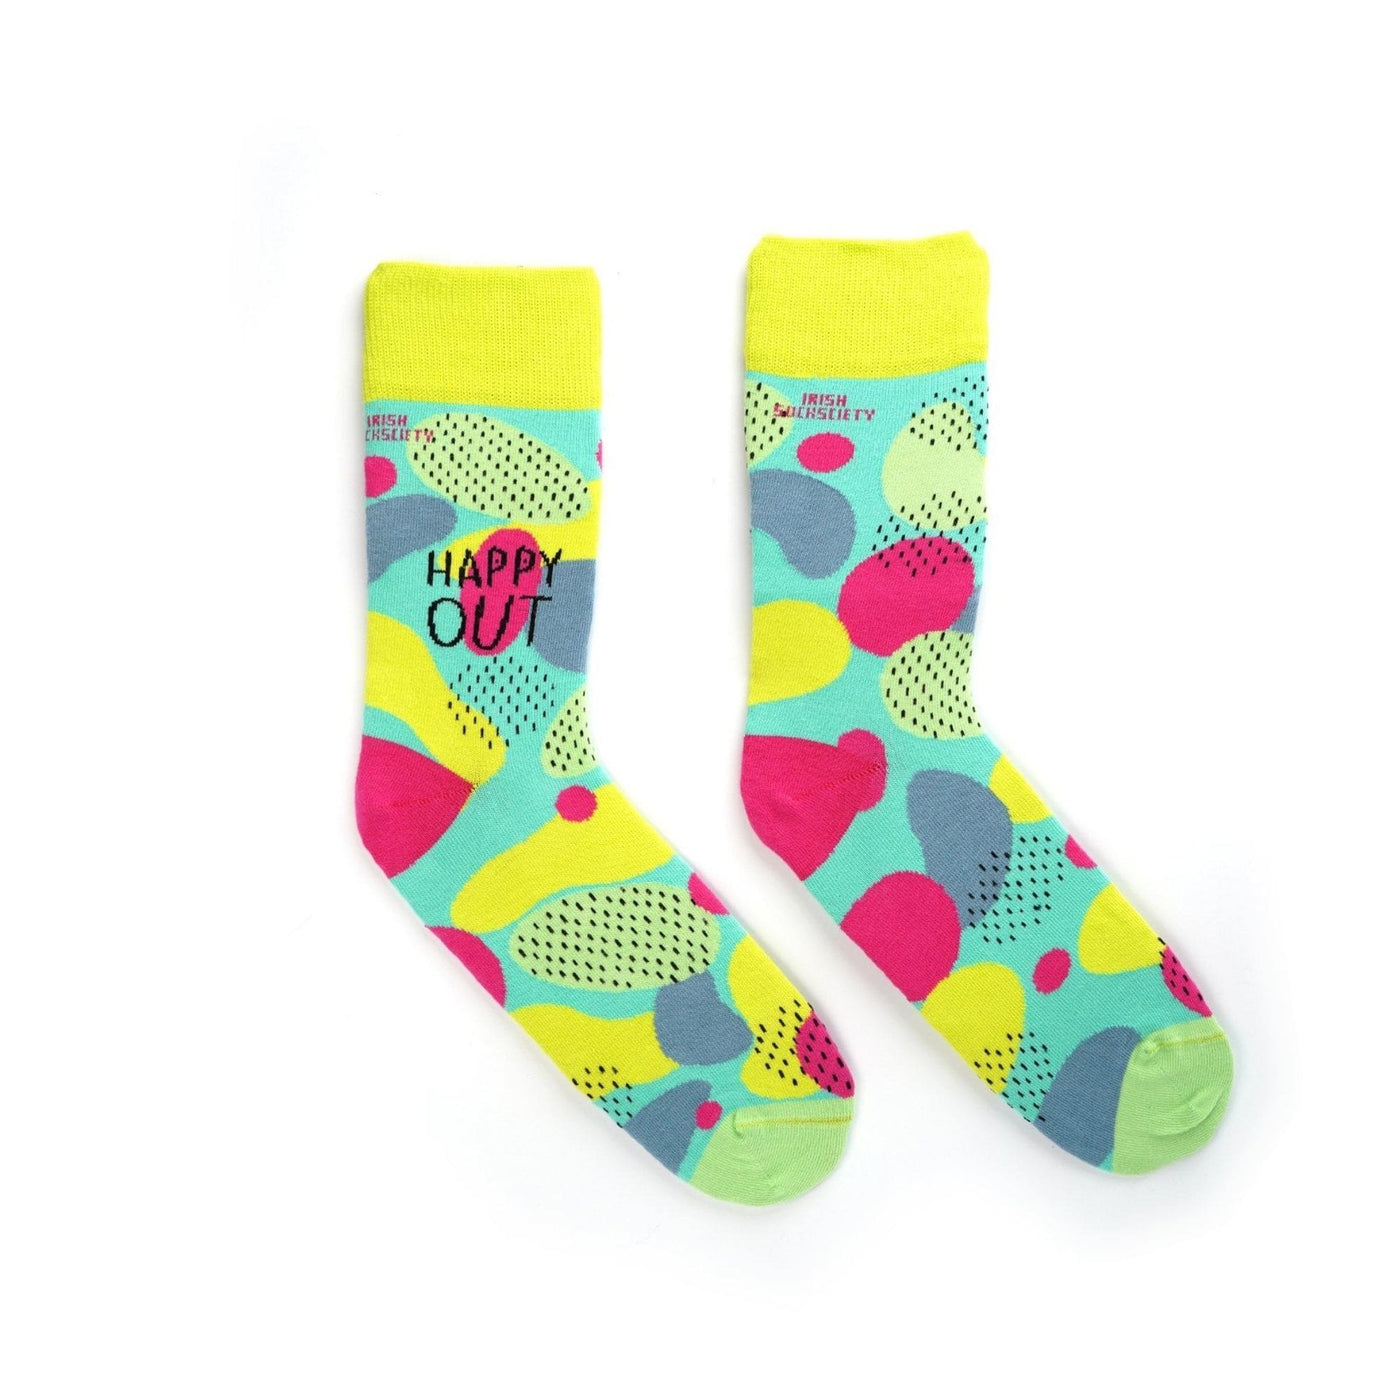 Irish Socksciety Socks 'Happy Out' Socks